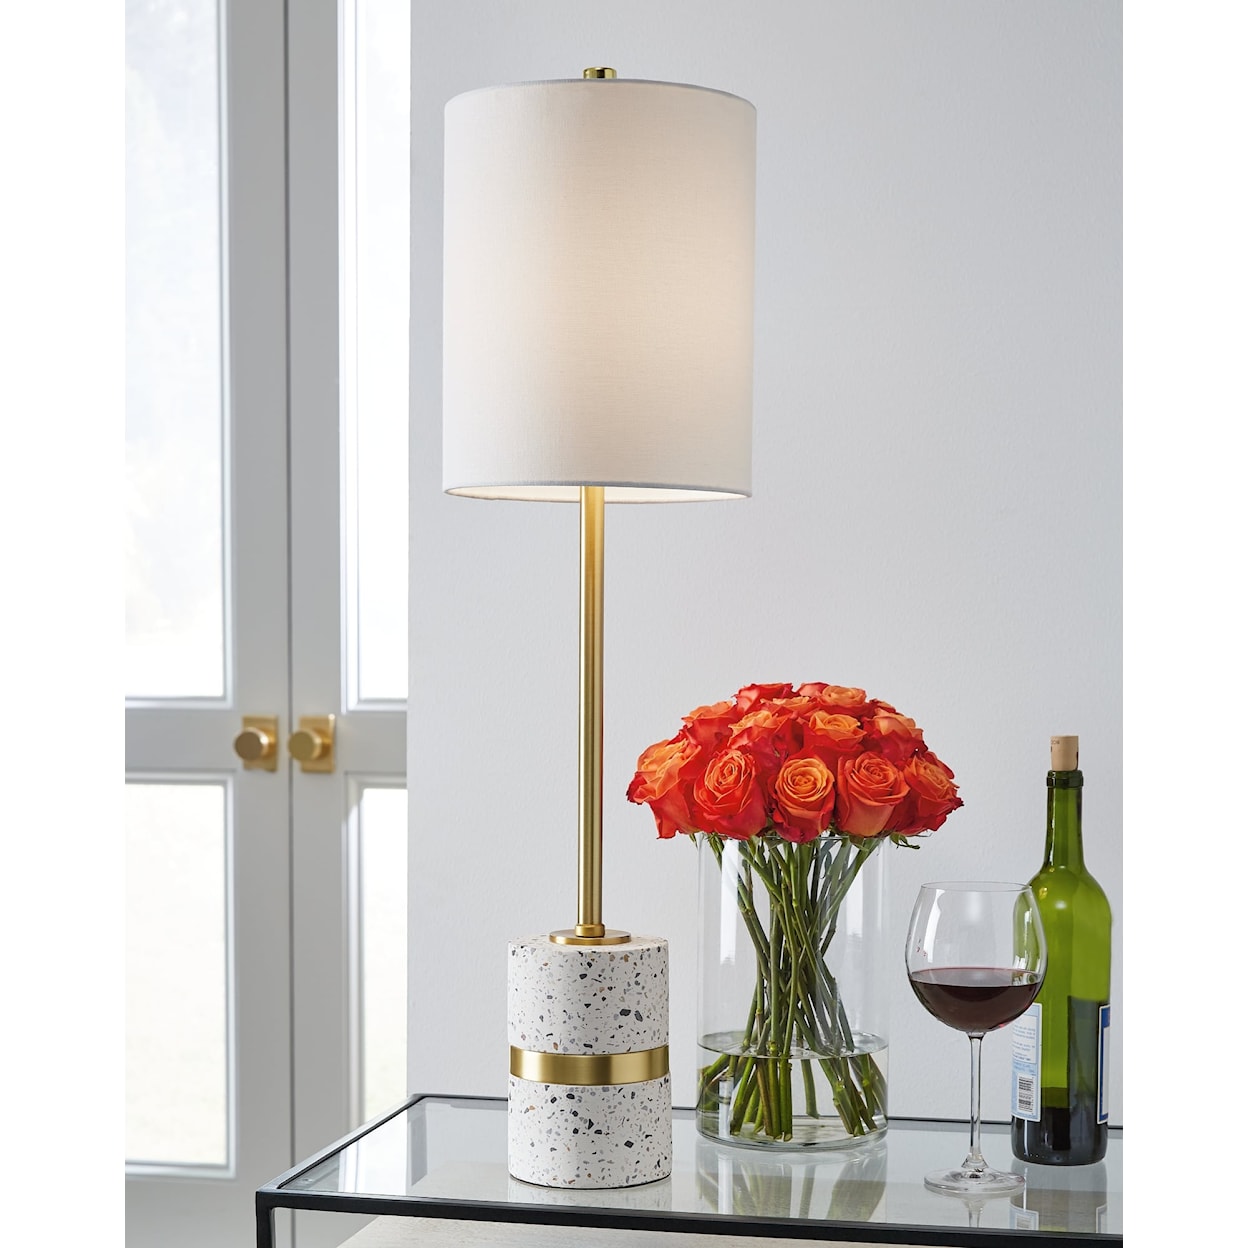 Ashley Furniture Signature Design Maywick Table Lamp